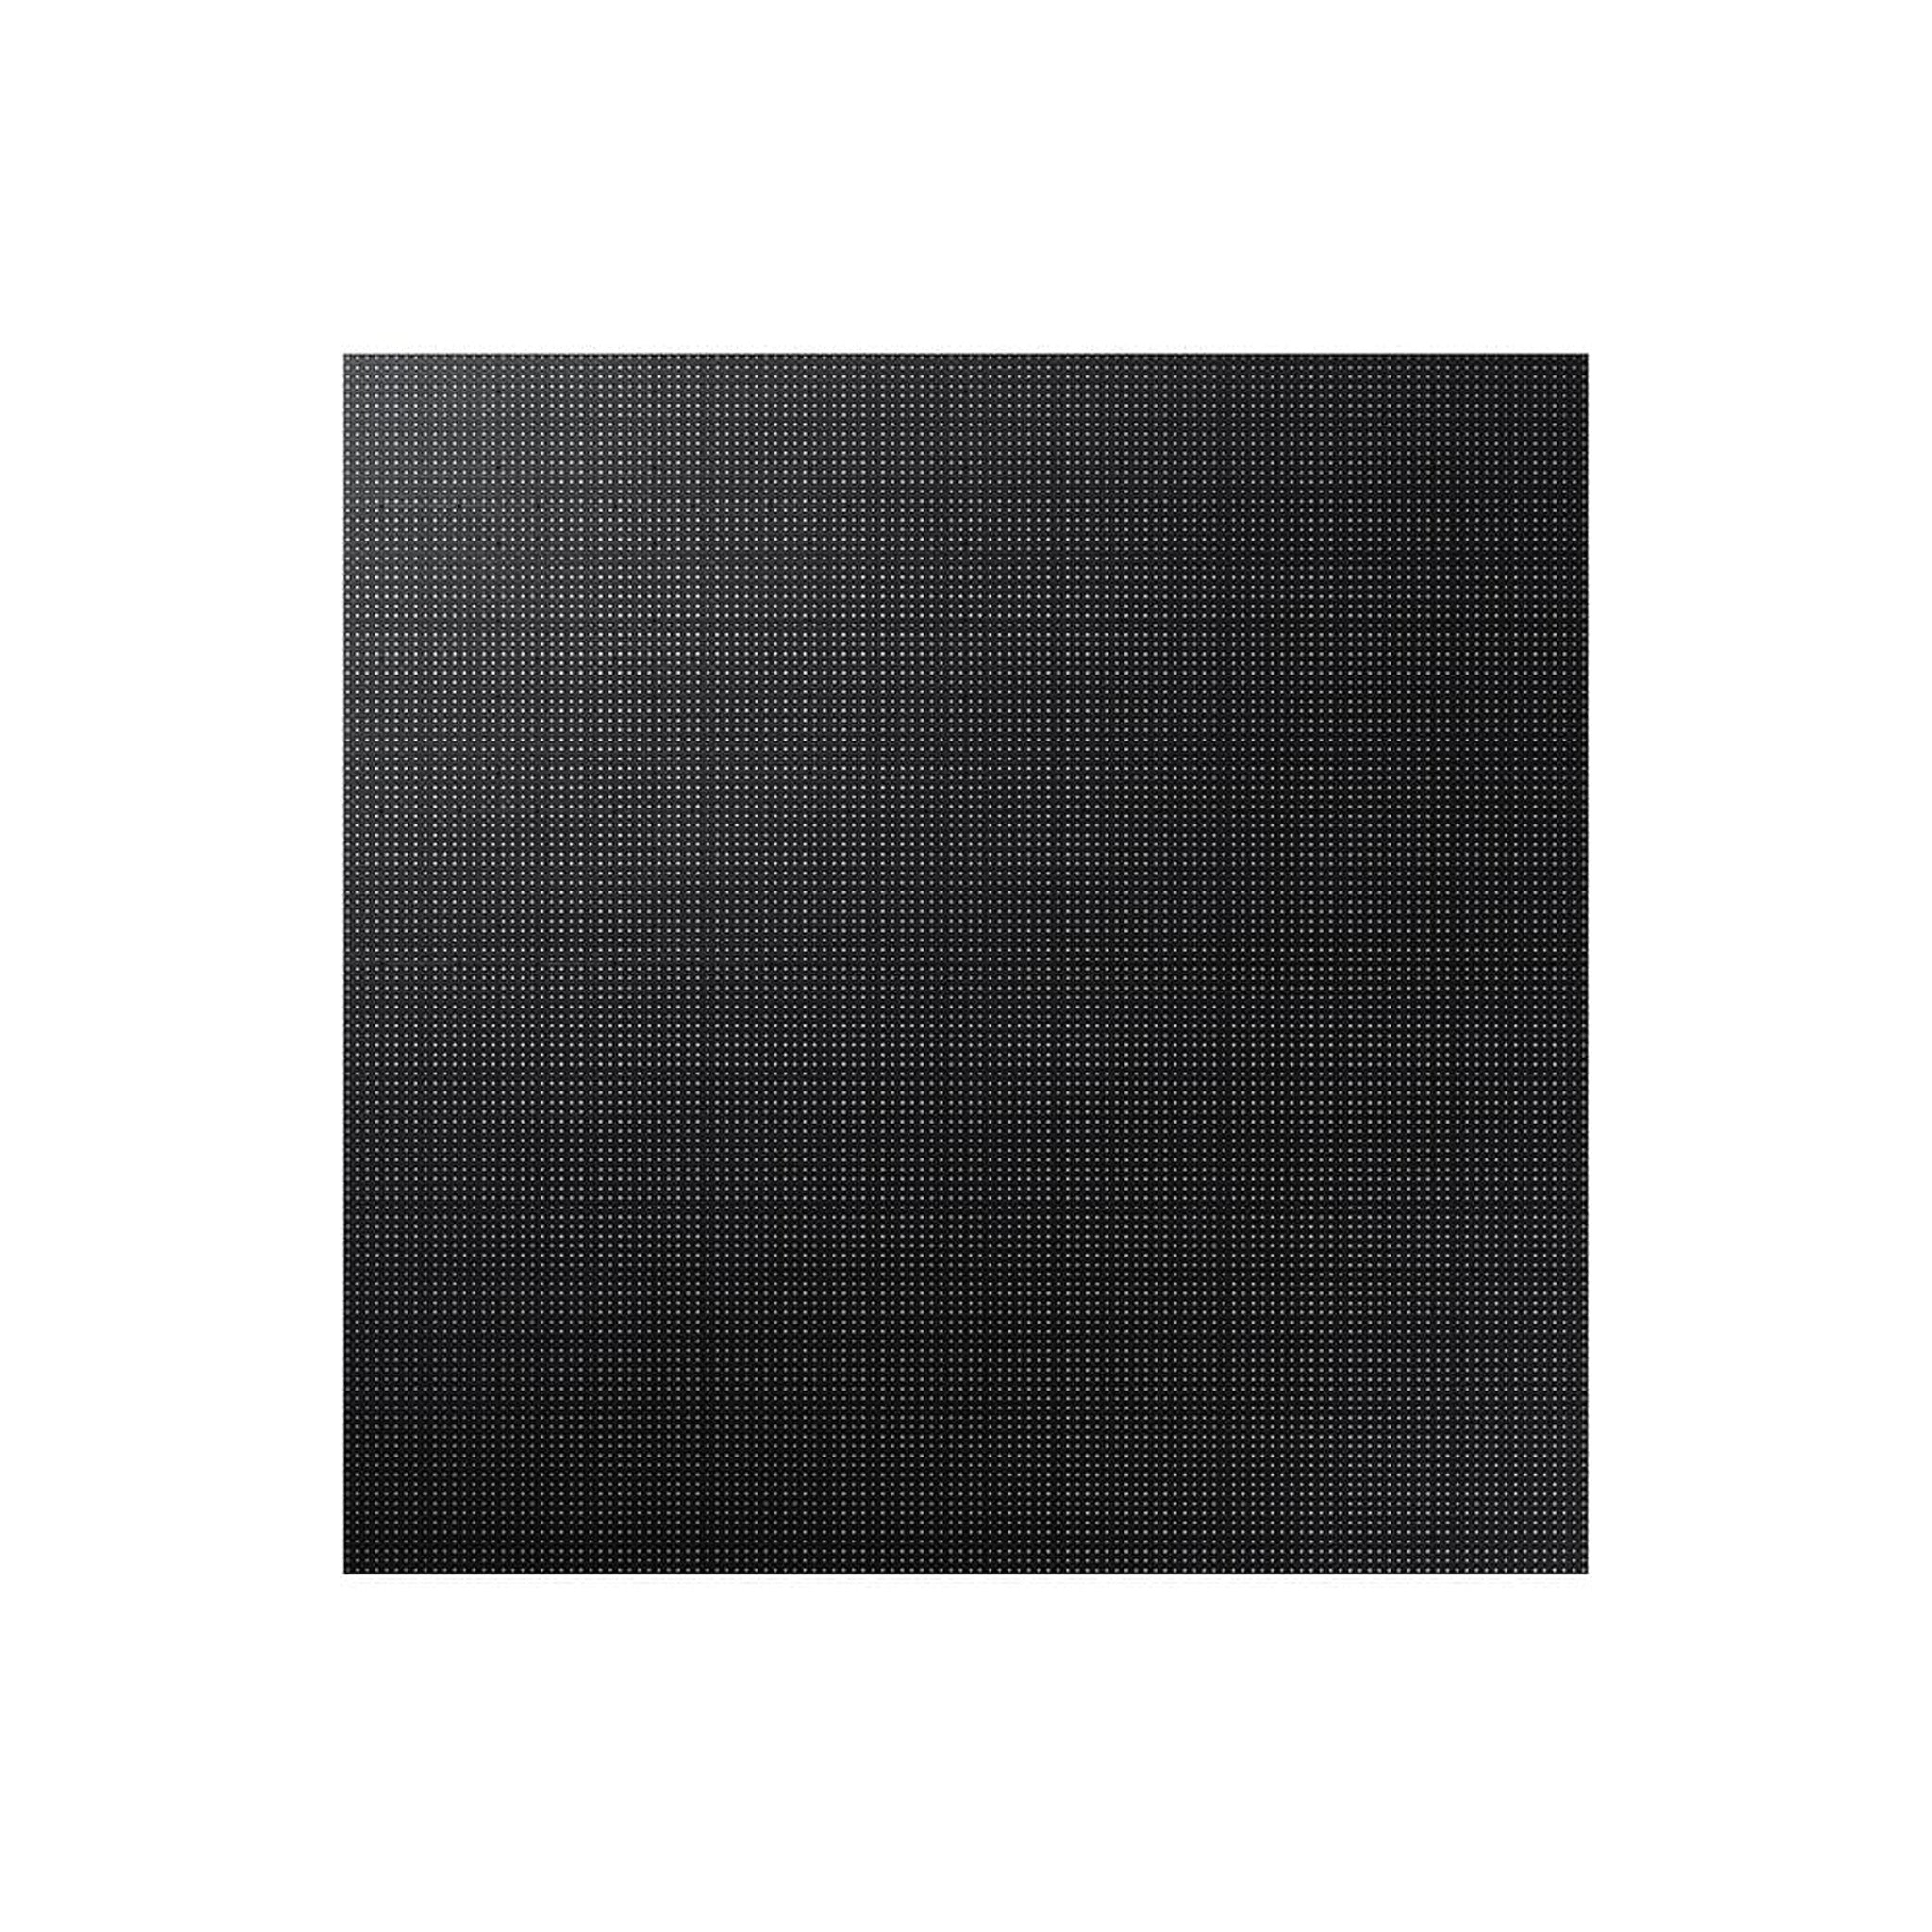 SAMSUNG OUTDOOR LED MODULE - XA10T - Pixel Pitch 10